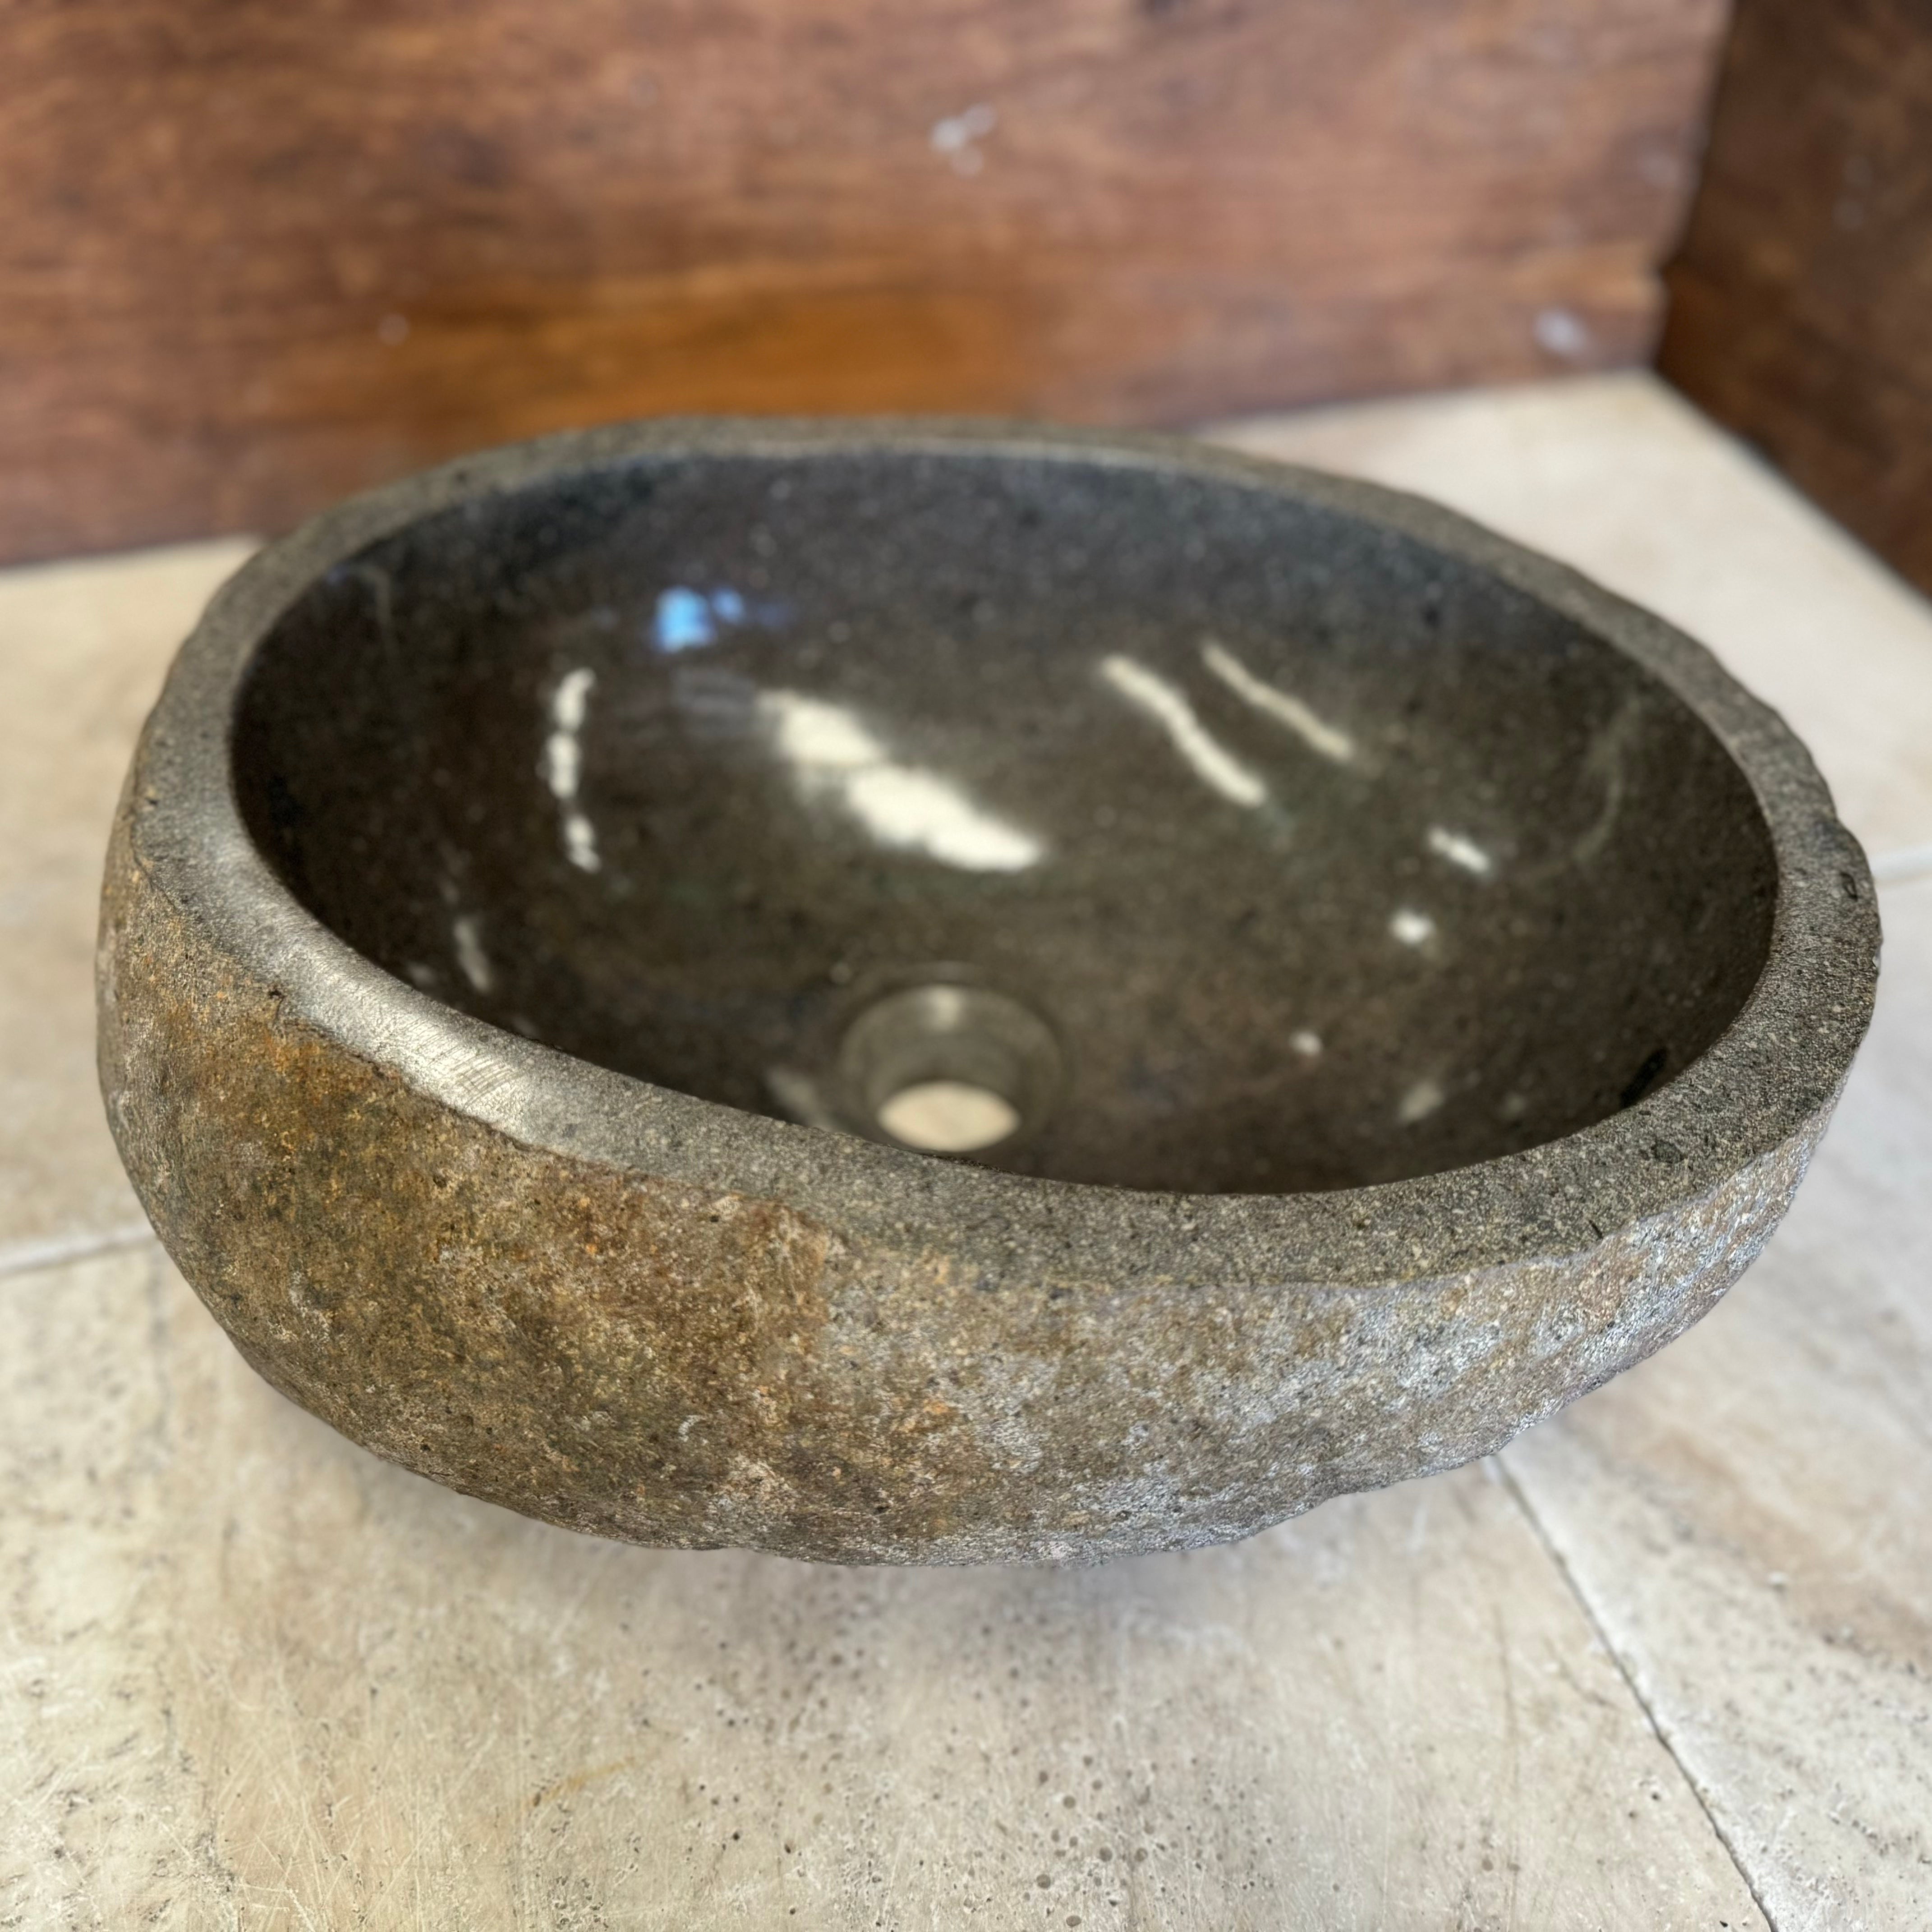 Handmade Natural Oval River Stone Bathroom Basin - RM2306114